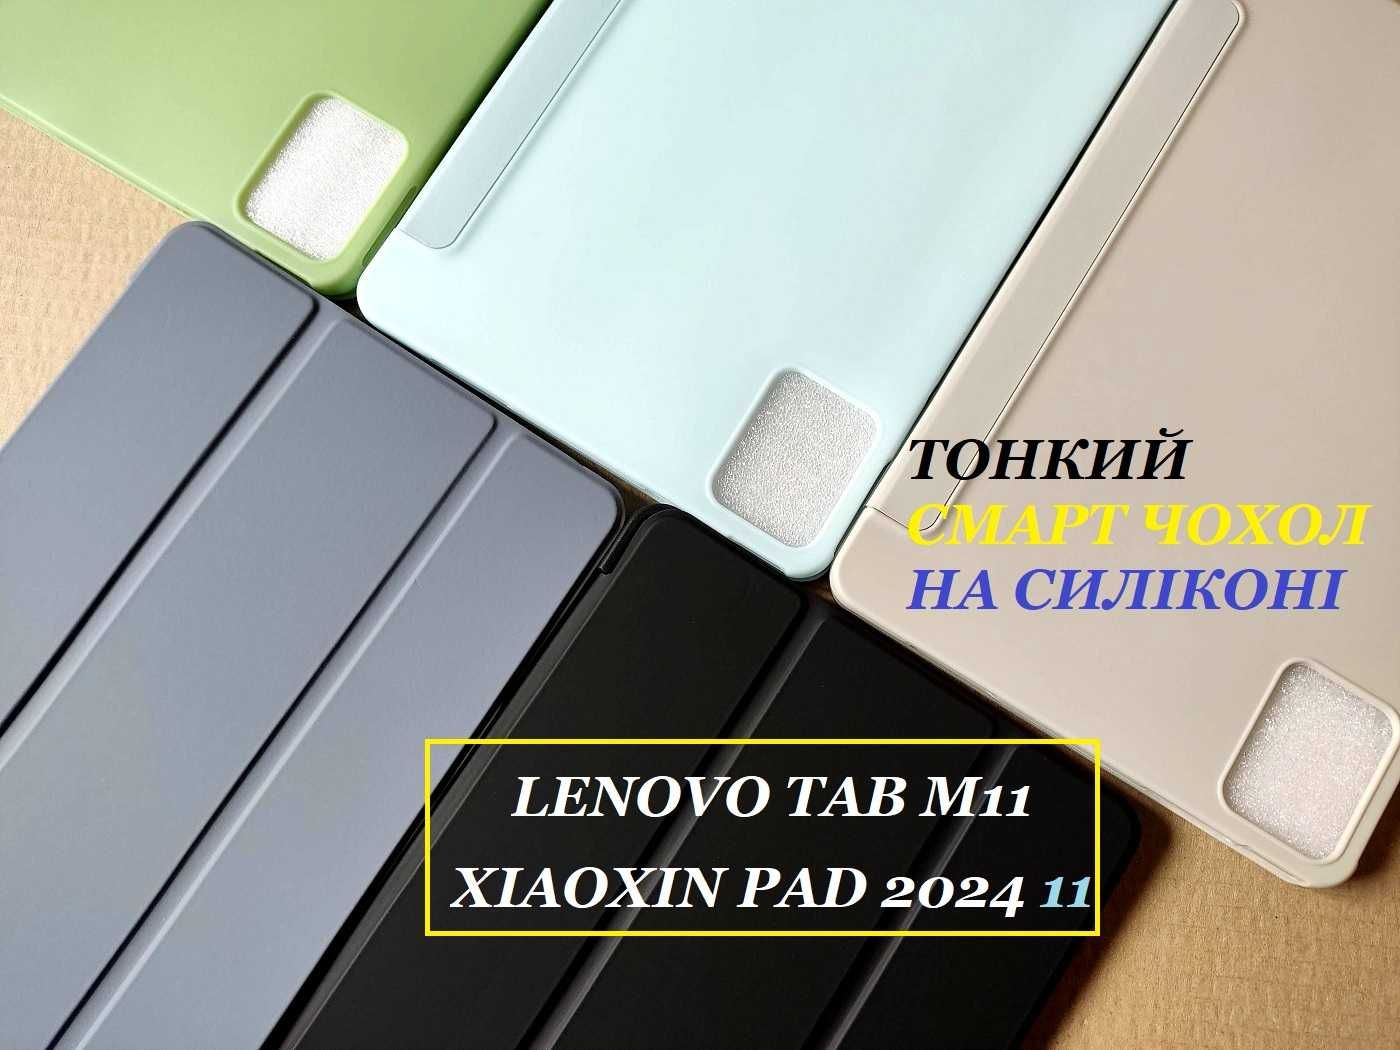 Чехол книжка на Lenovo Tab M11 (Xiaoxin pad 2024) tab m11 на силиконе